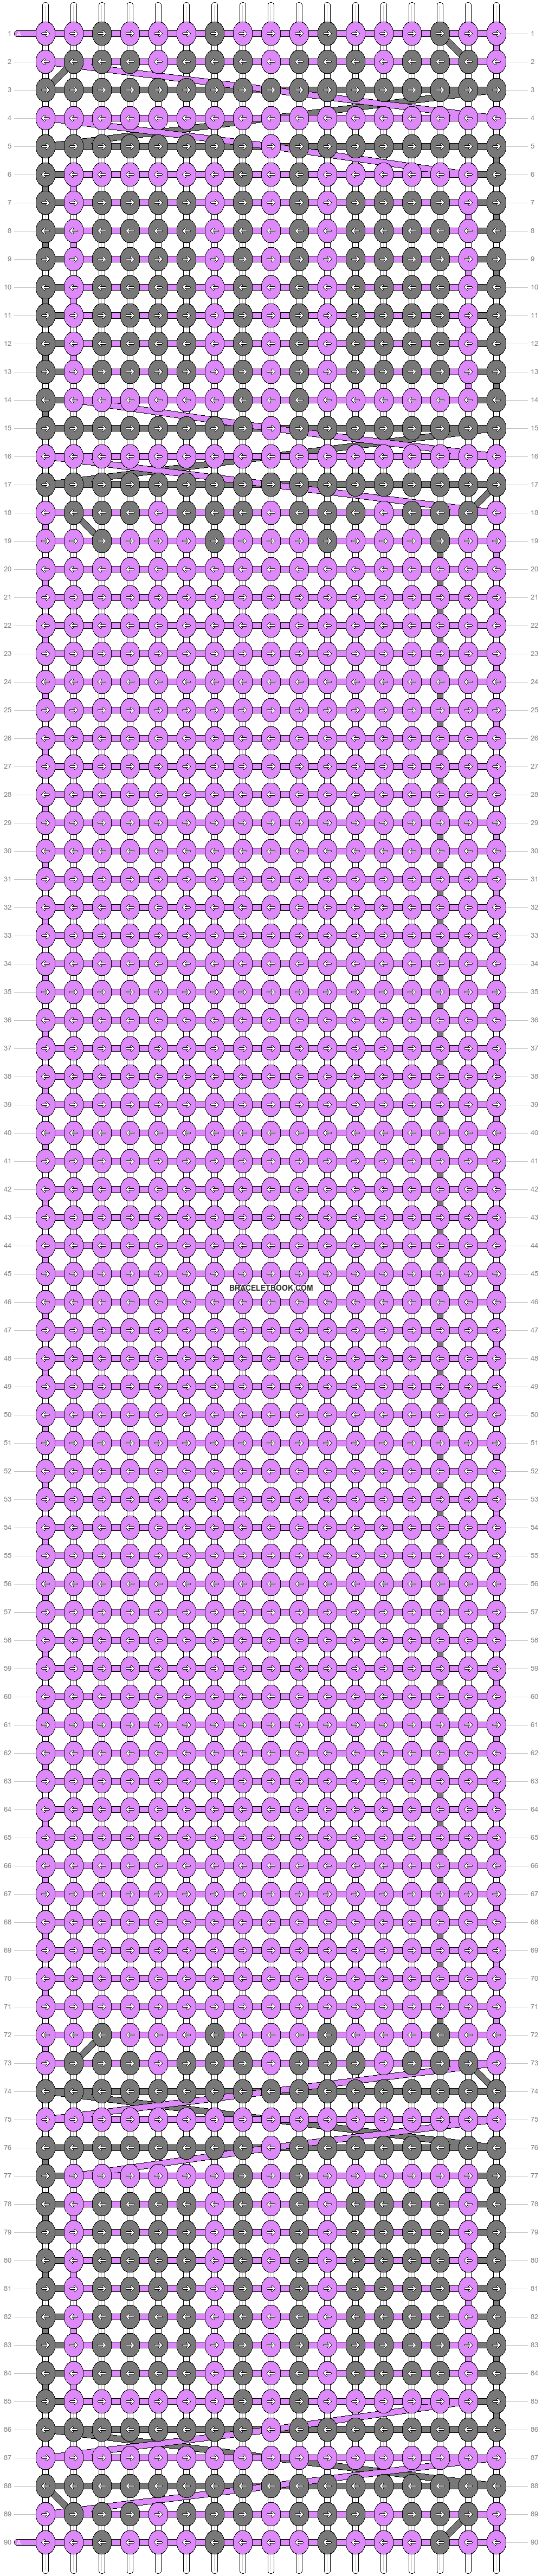 Alpha pattern #30743 variation #19240 pattern